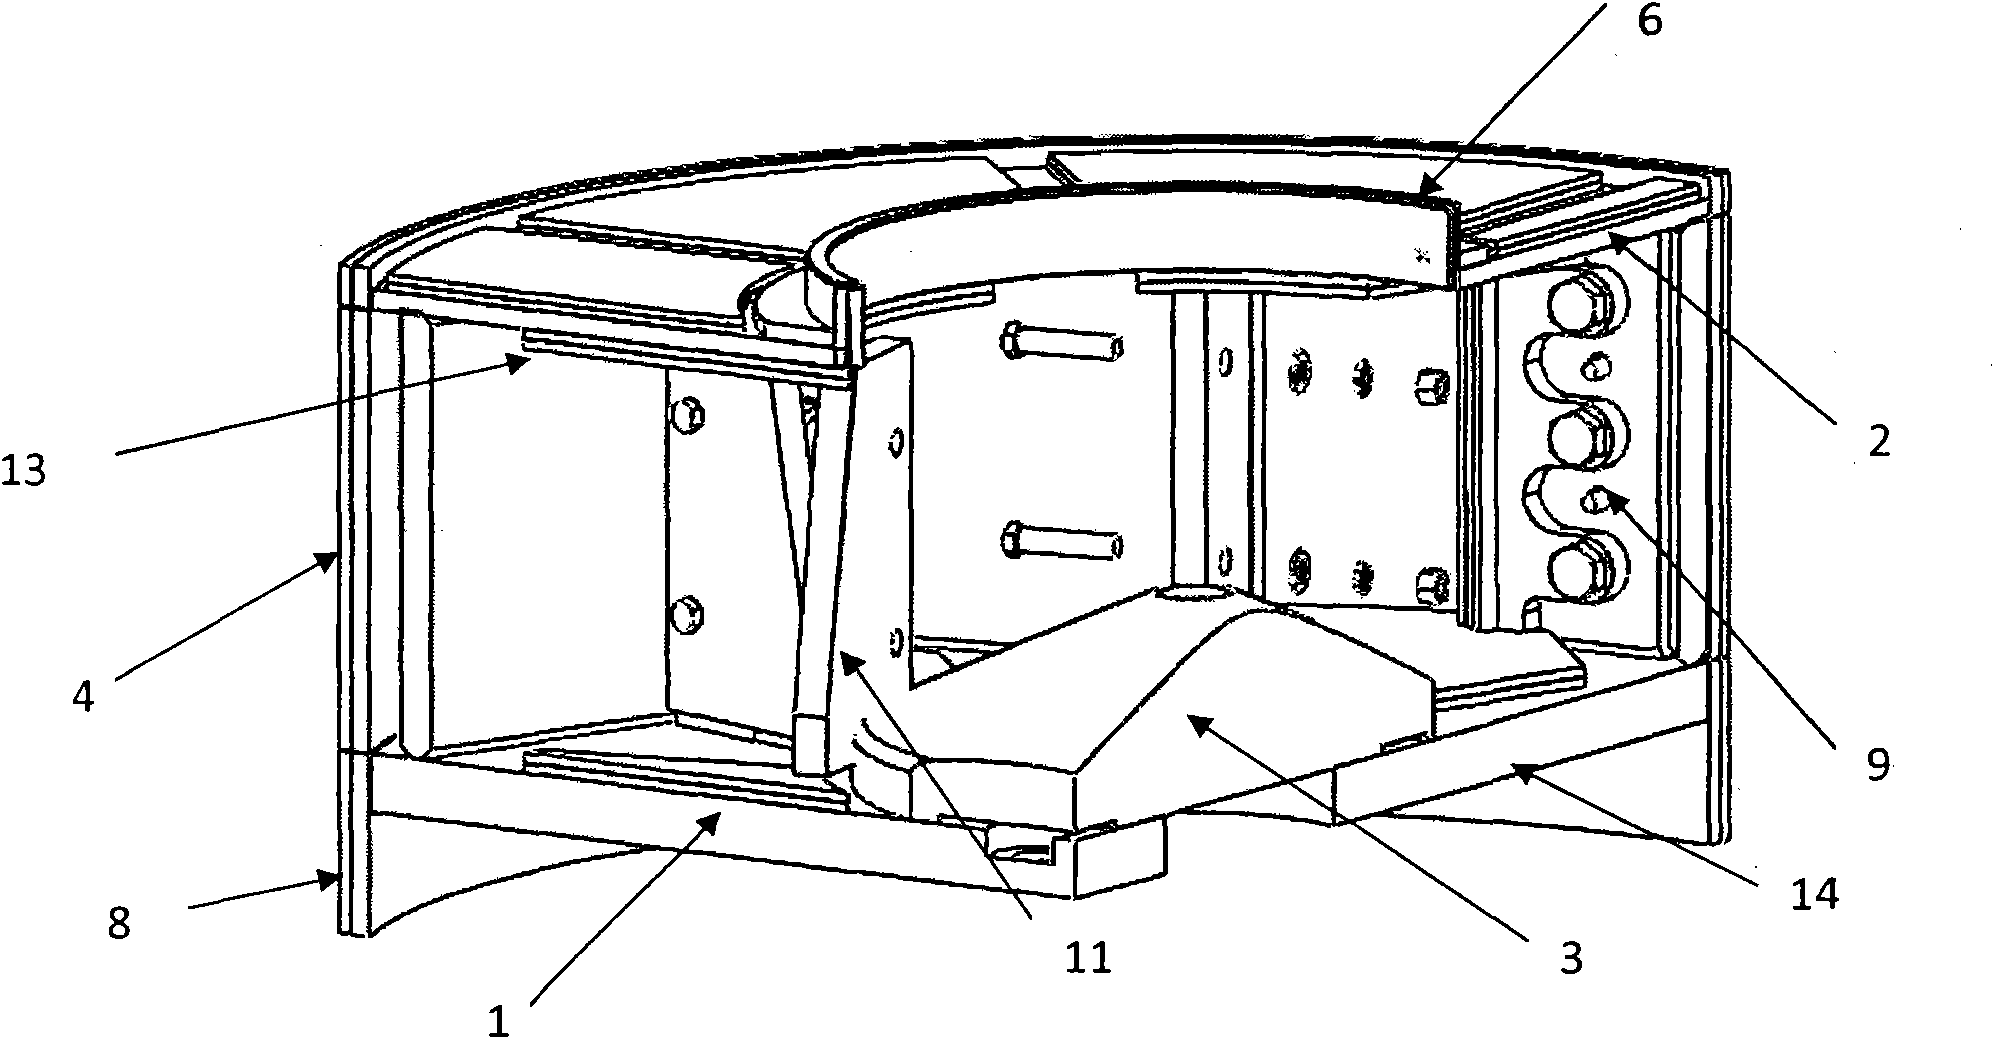 Structure type impeller breaker